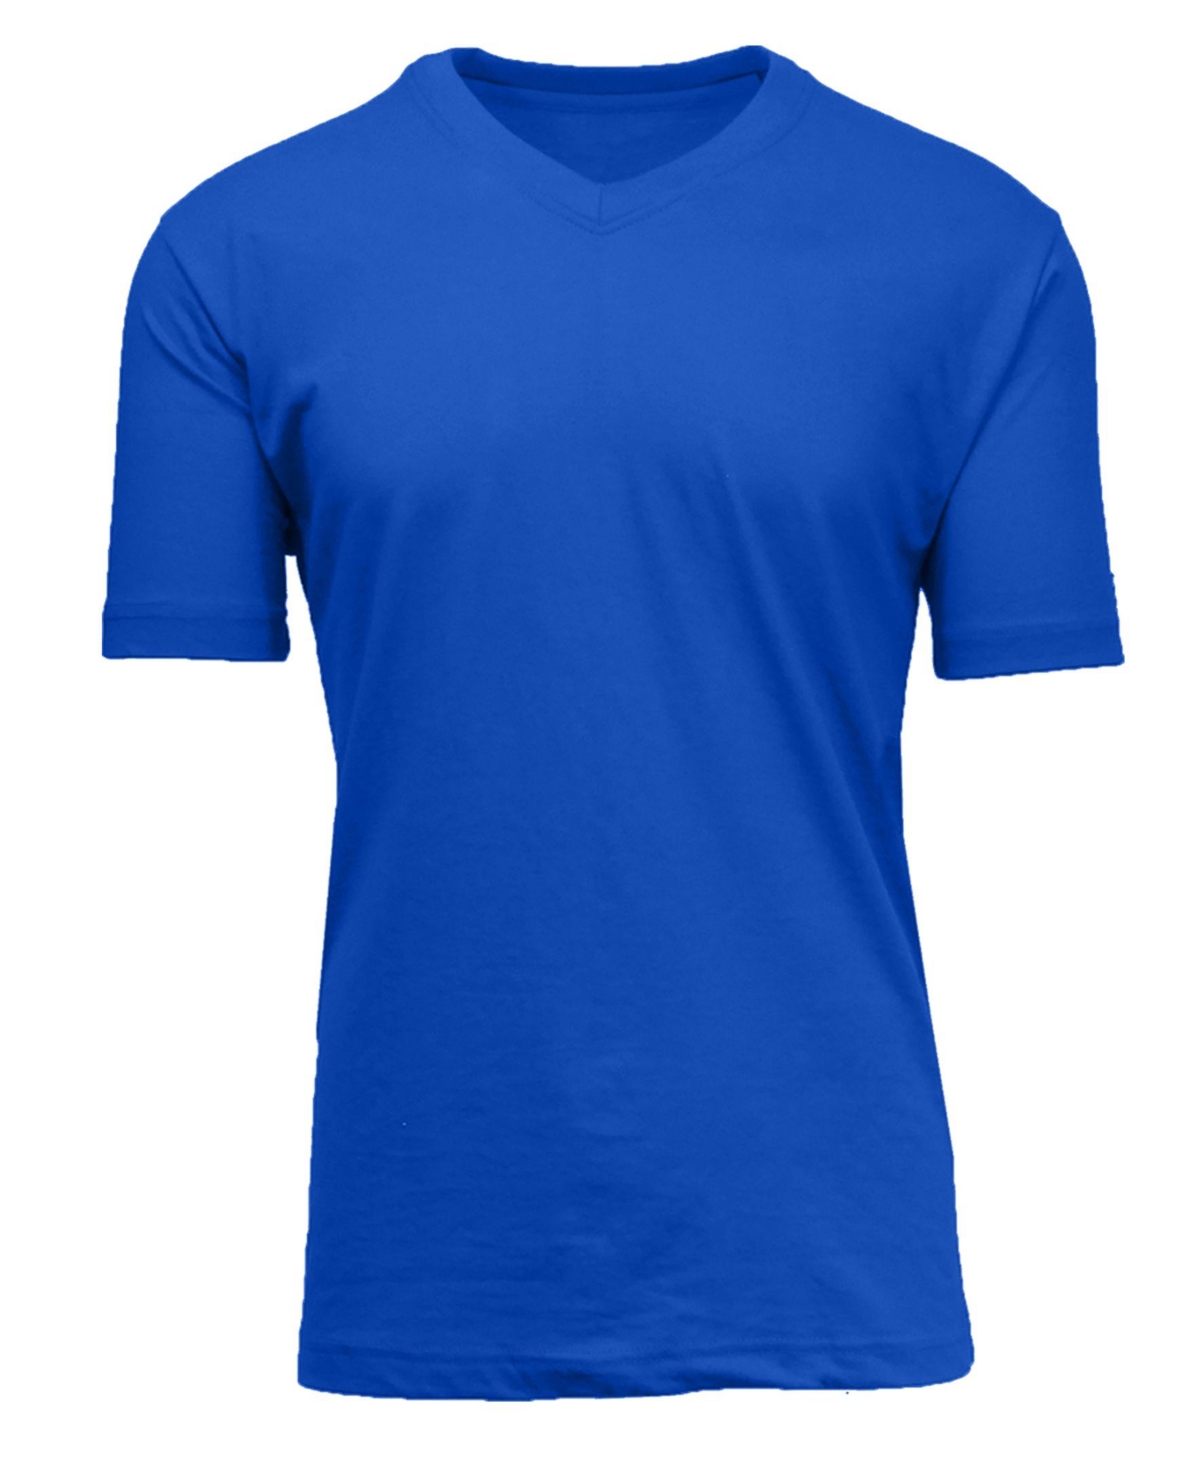 Men's Short Sleeve V-Neck T-shirt - Royal